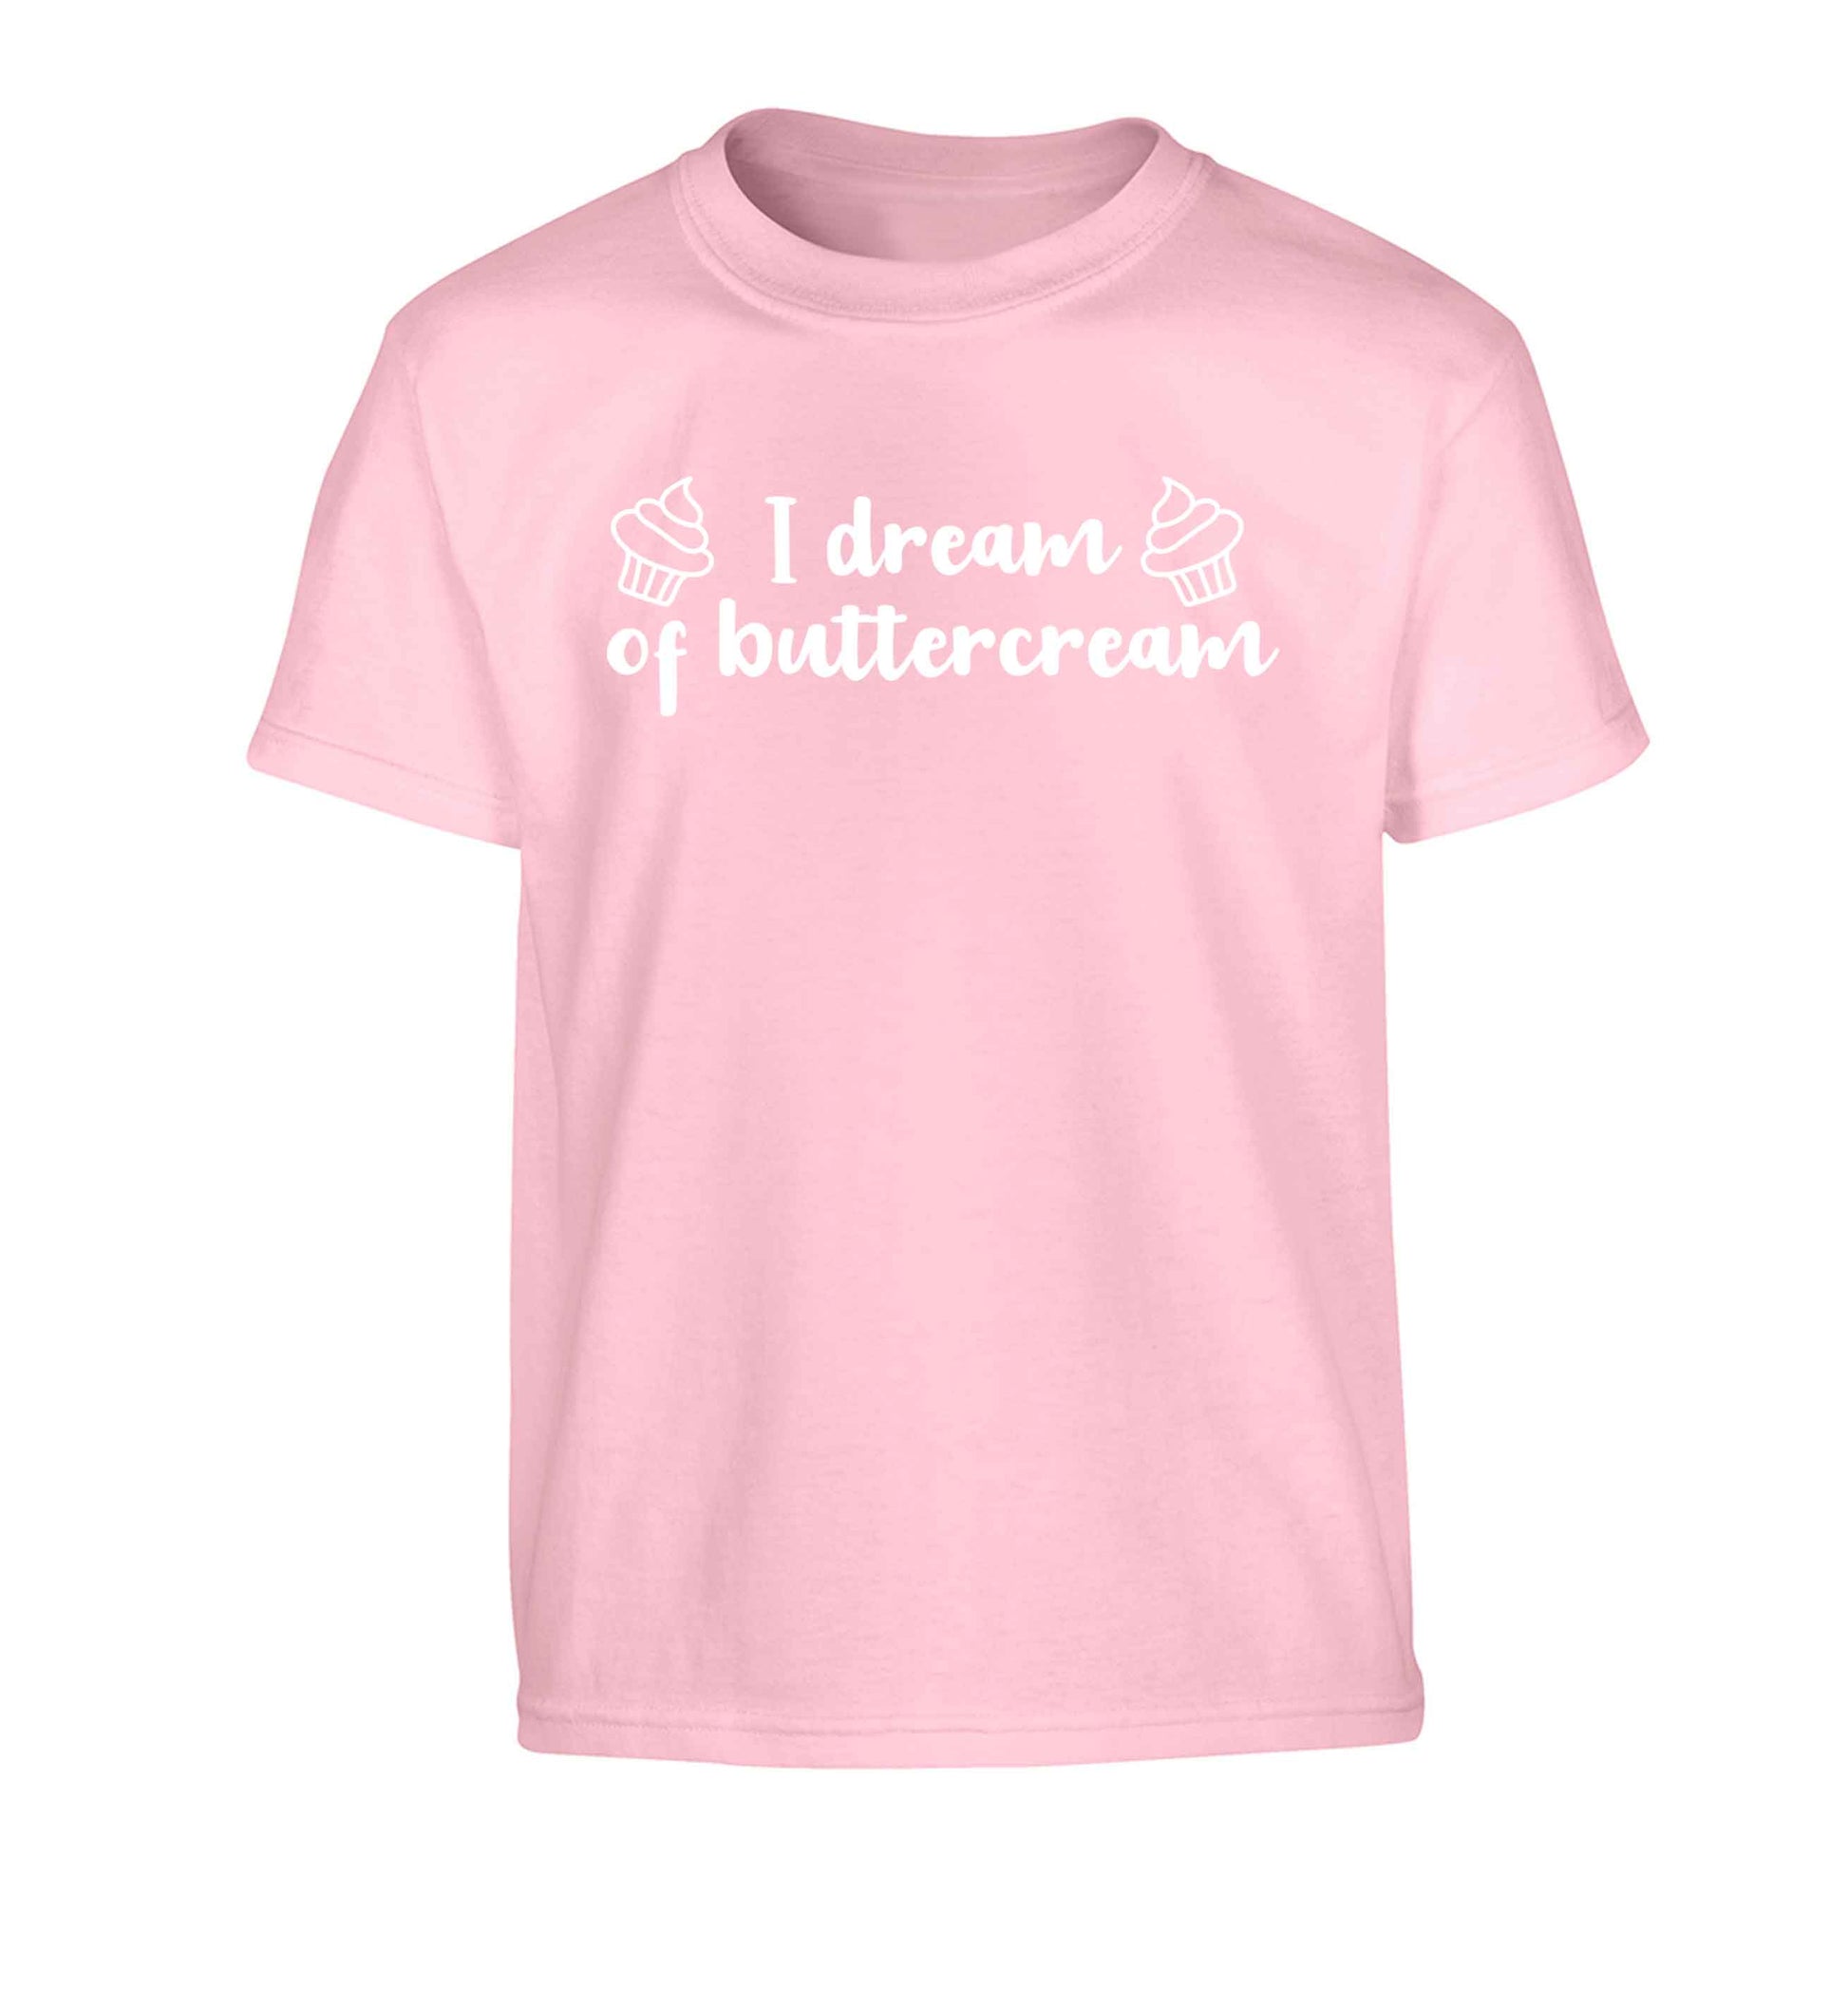 I dream of buttercream Children's light pink Tshirt 12-13 Years